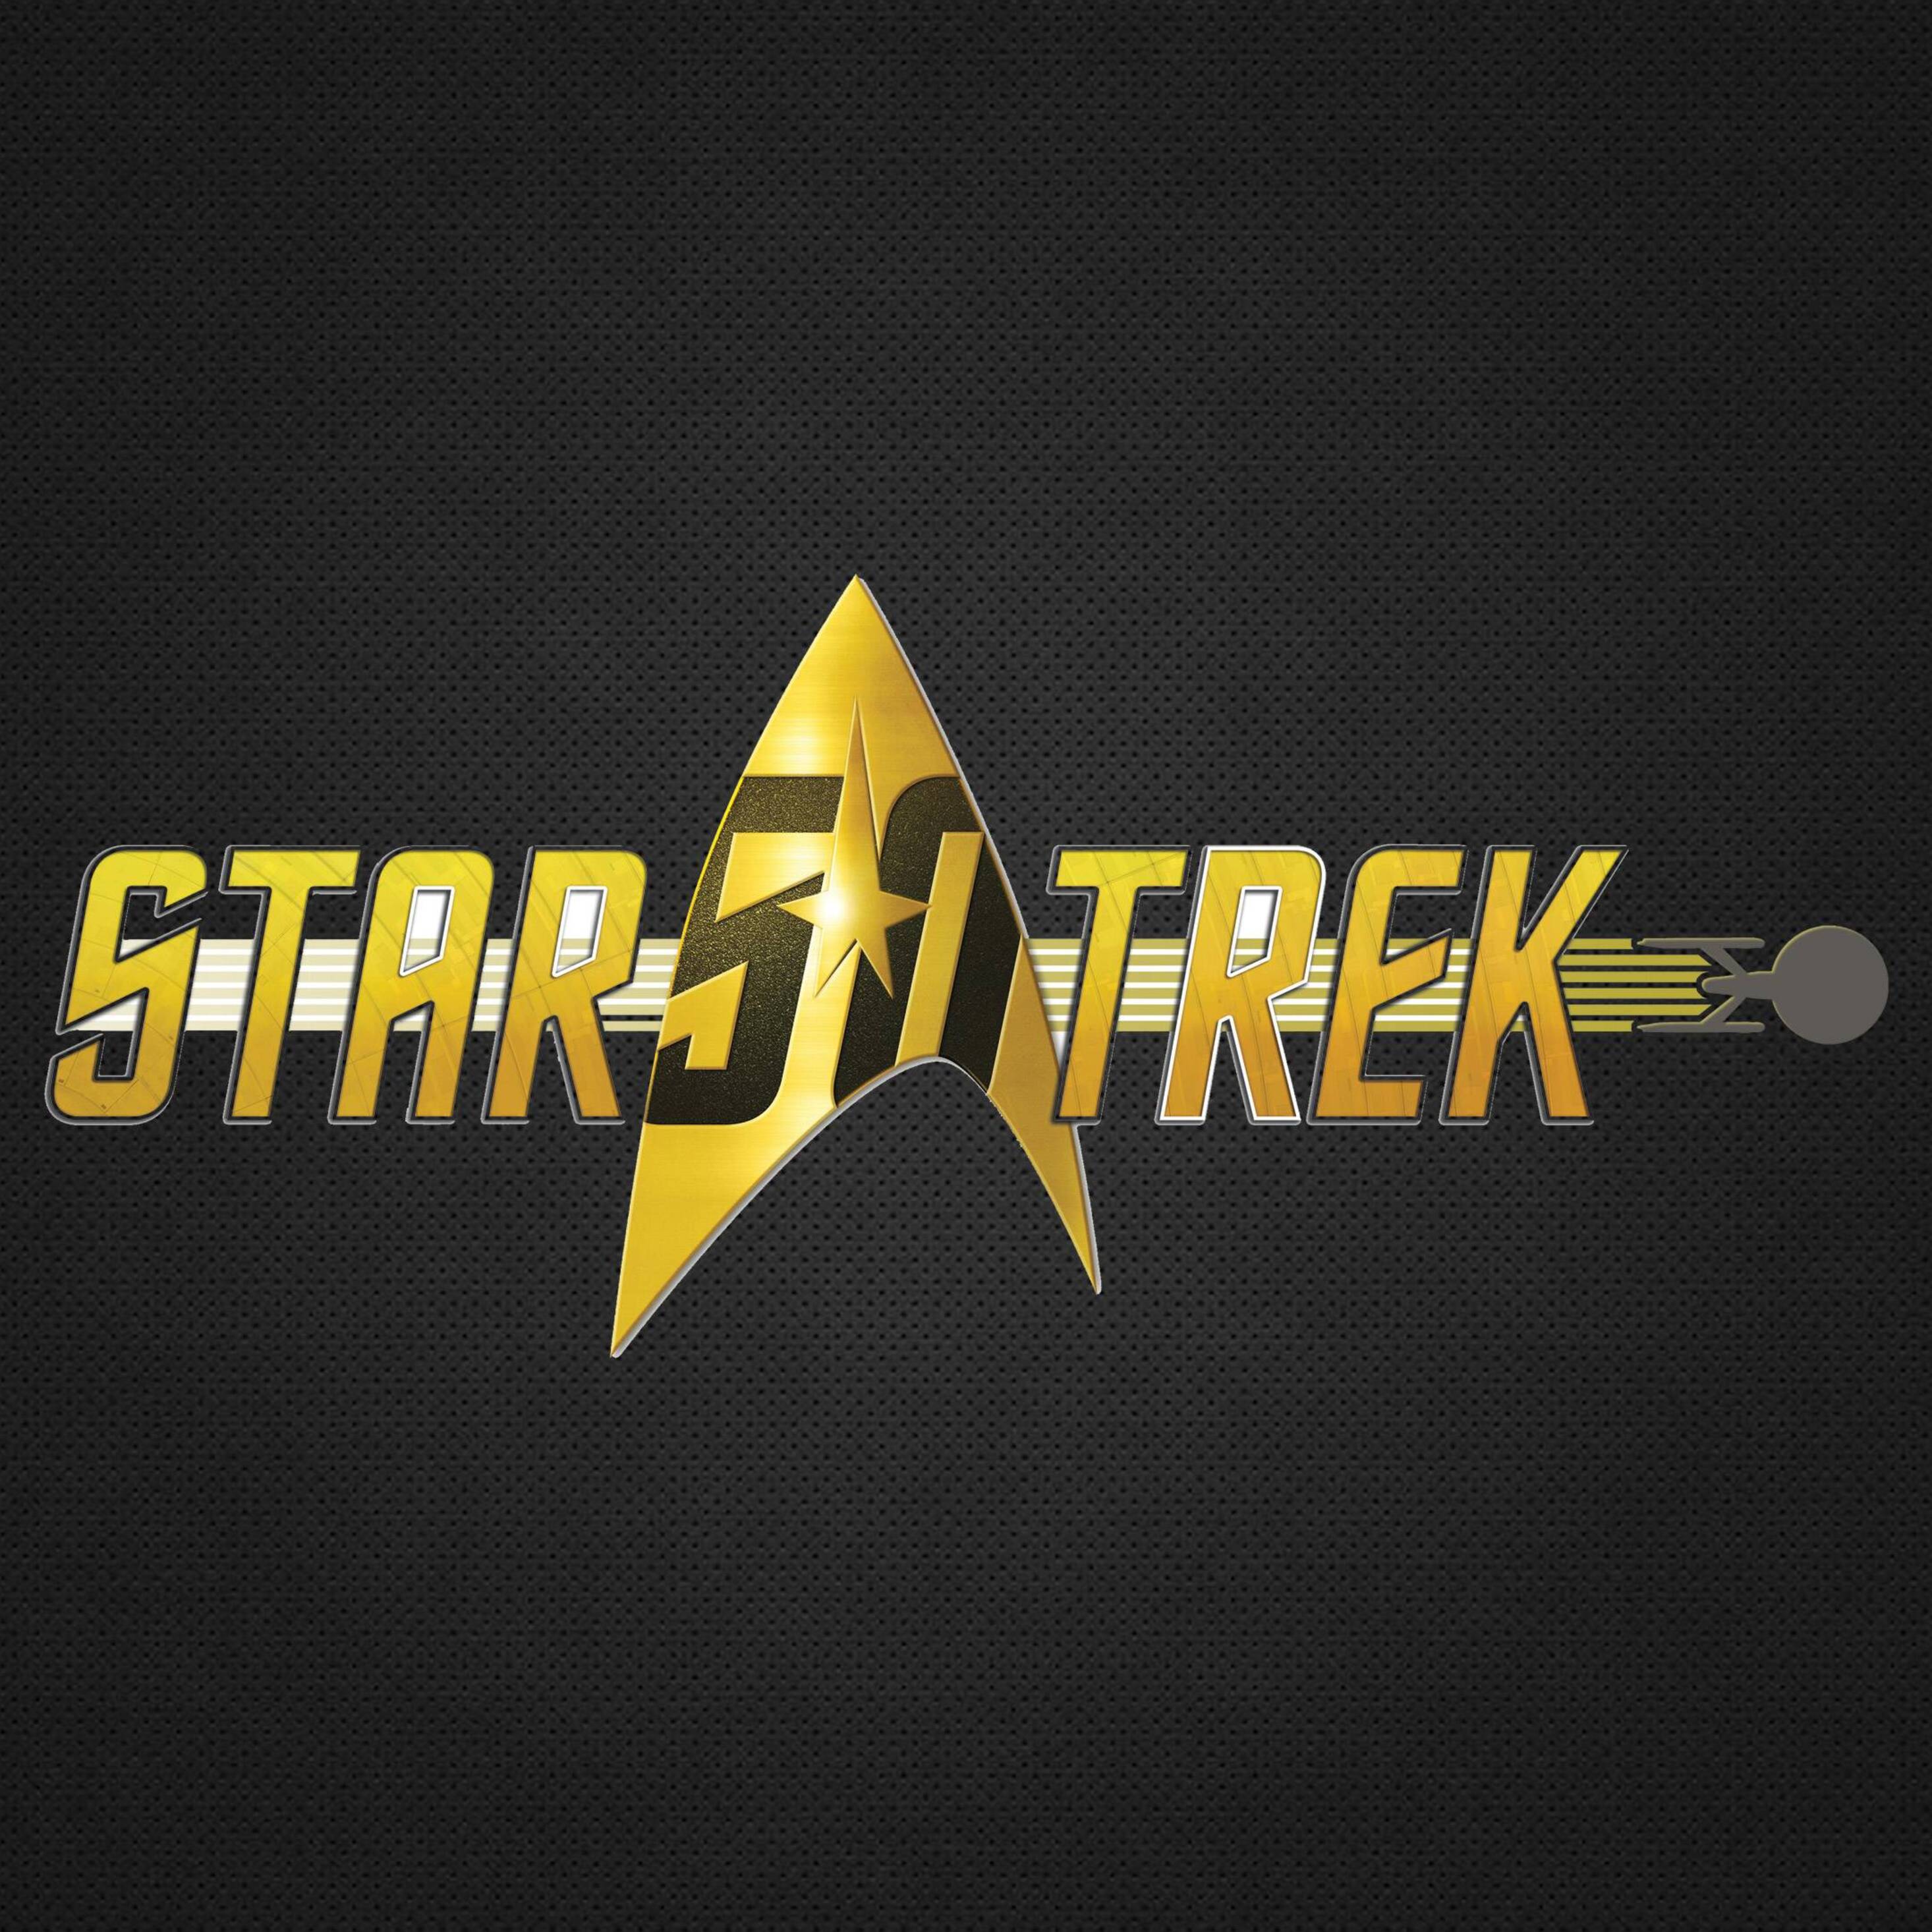 Star Trek Ipad Wallpaper